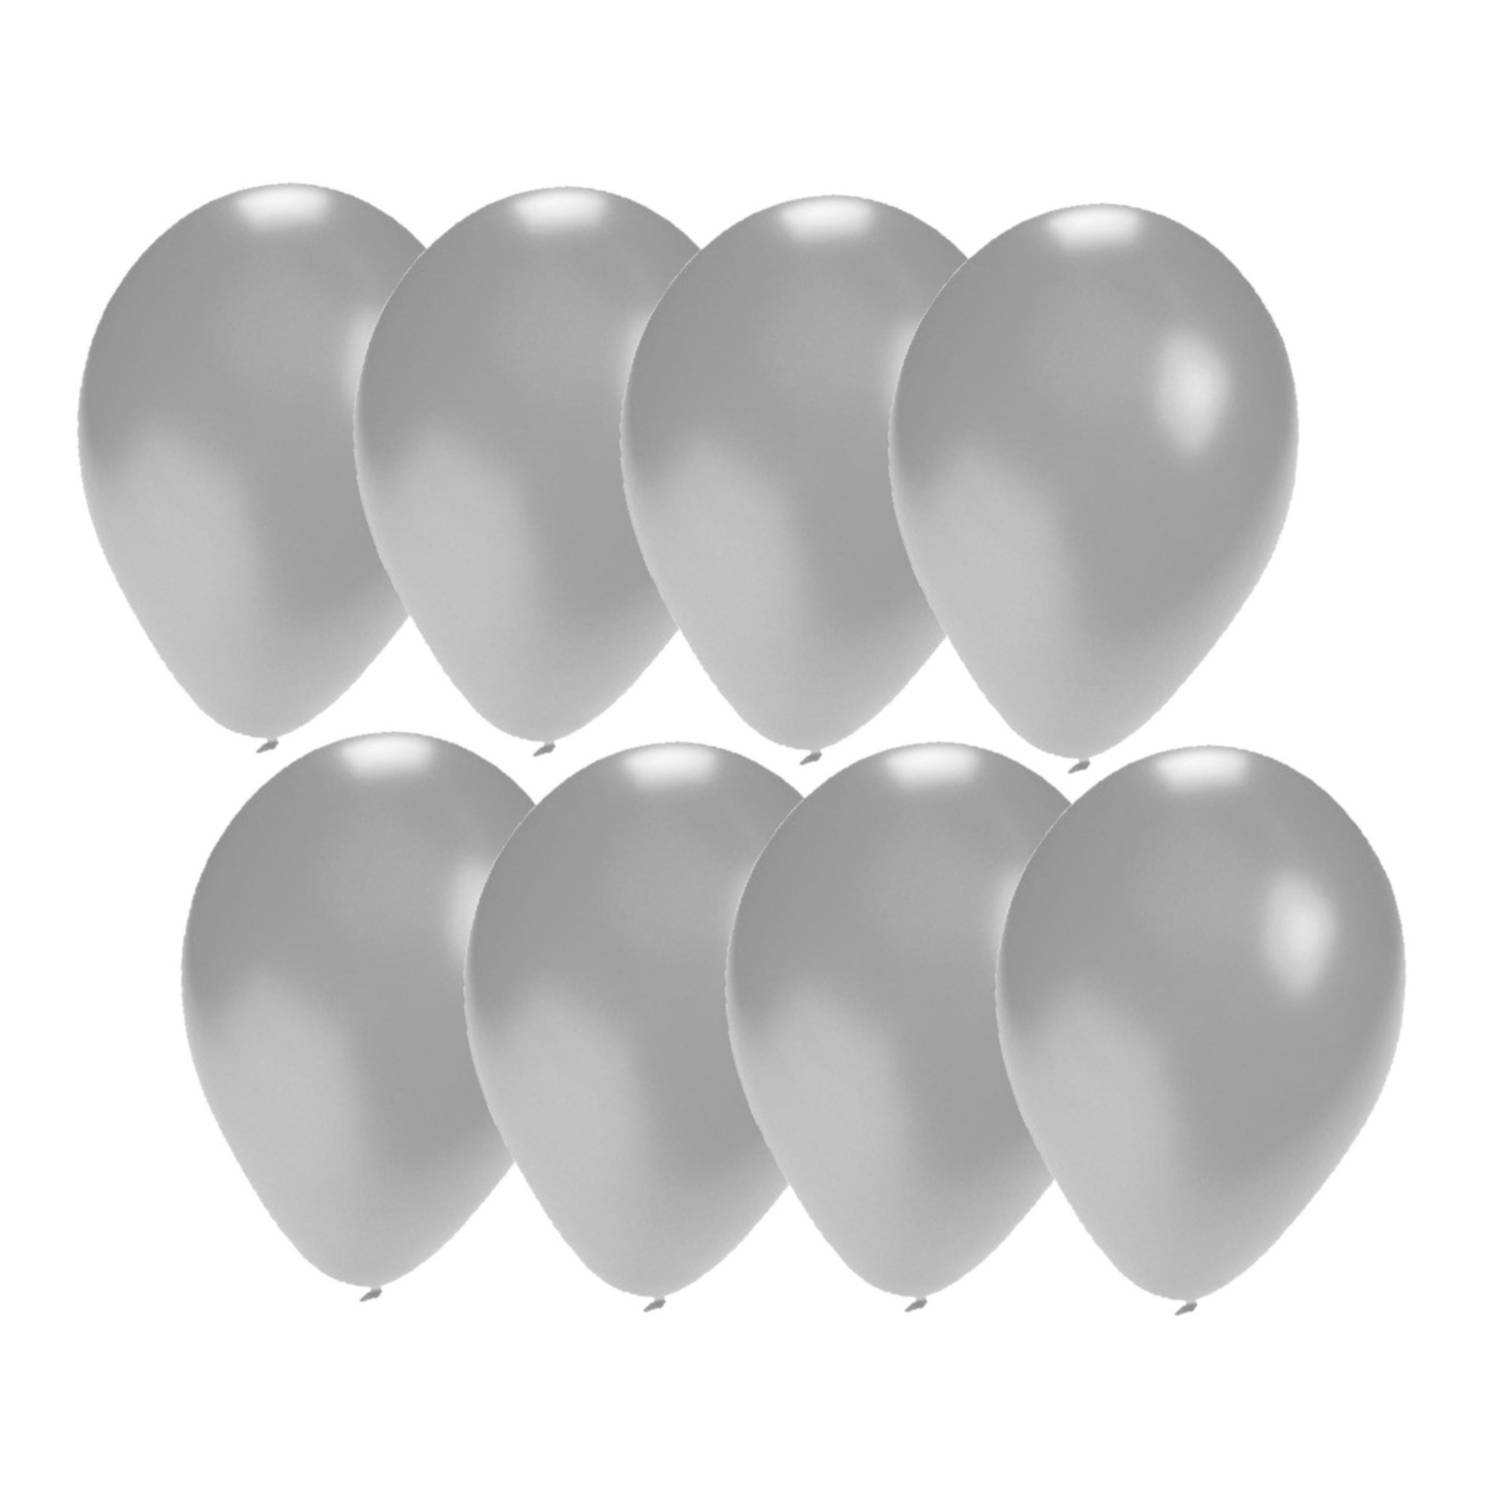 30x stuks zilveren party ballonnen van 27 cm - Ballonnen